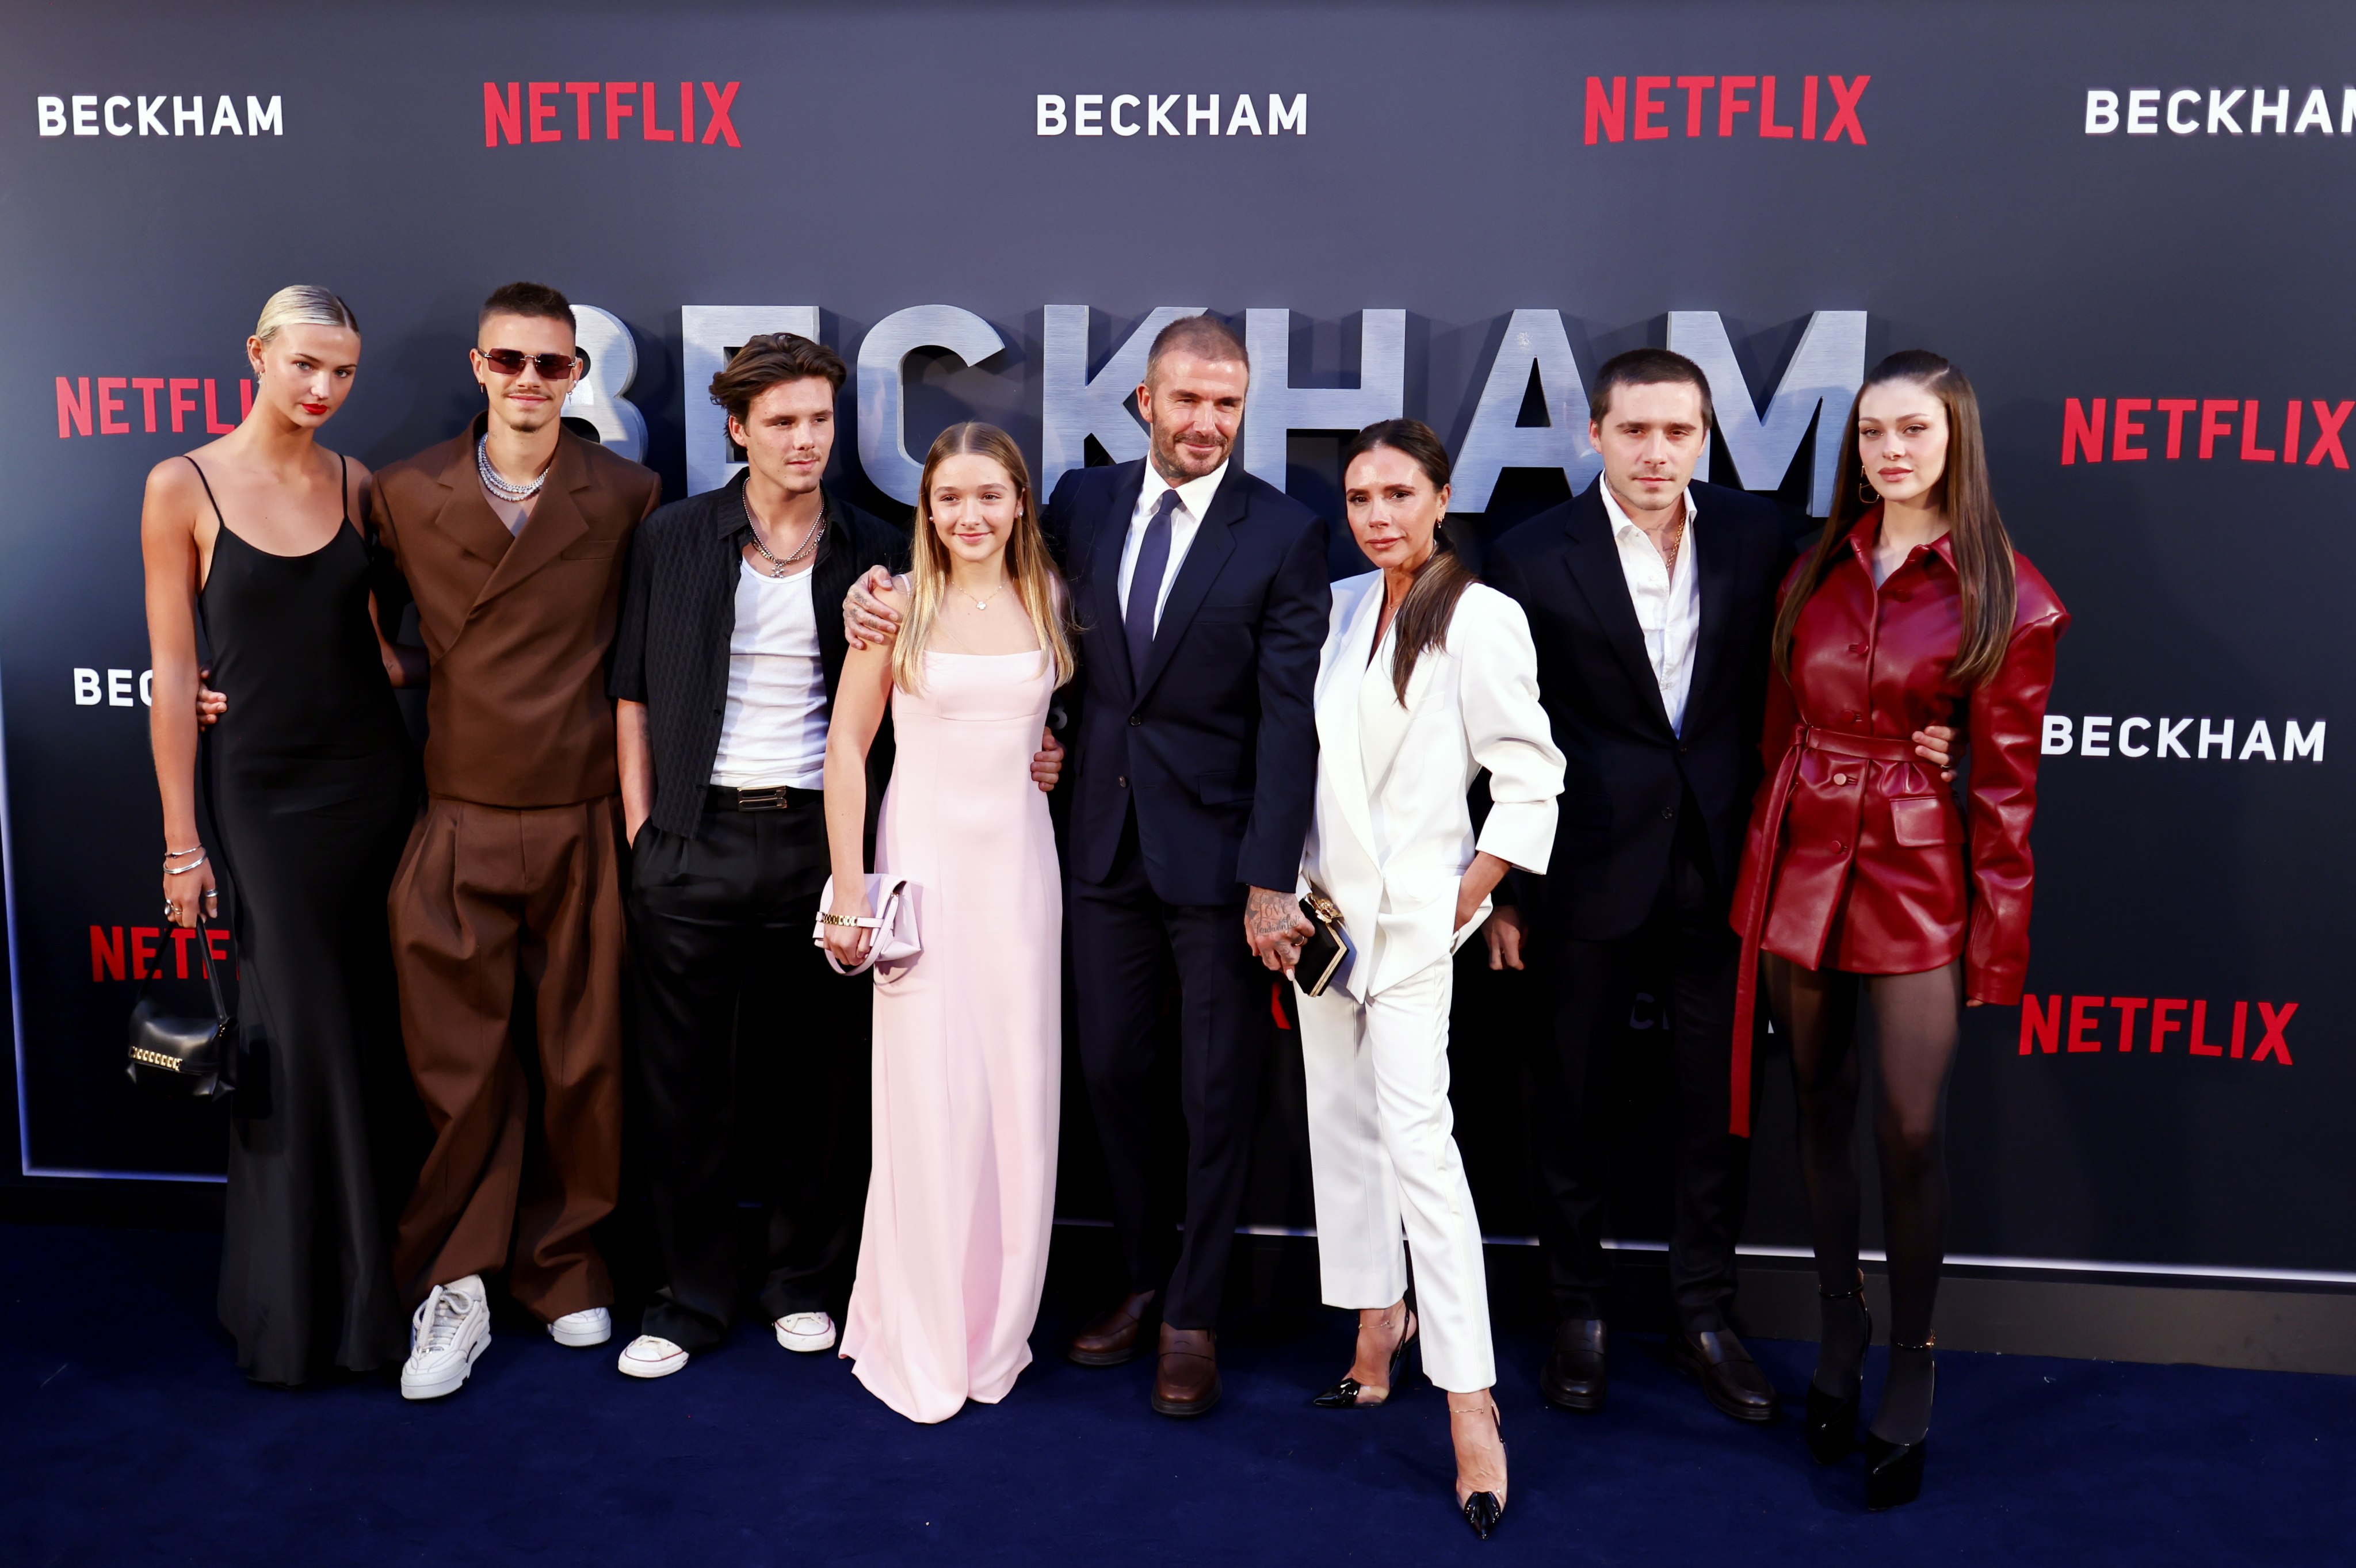 From left: Mia Regan, Romeo Beckham, Cruz Beckham, Harper Beckham, David Beckham, Victoria Beckham, Brooklyn Peltz Beckham,and Nicola Peltz Beckham at the premiere of Beckham, Netflix’s docuseries. Photo: EPA-EFE